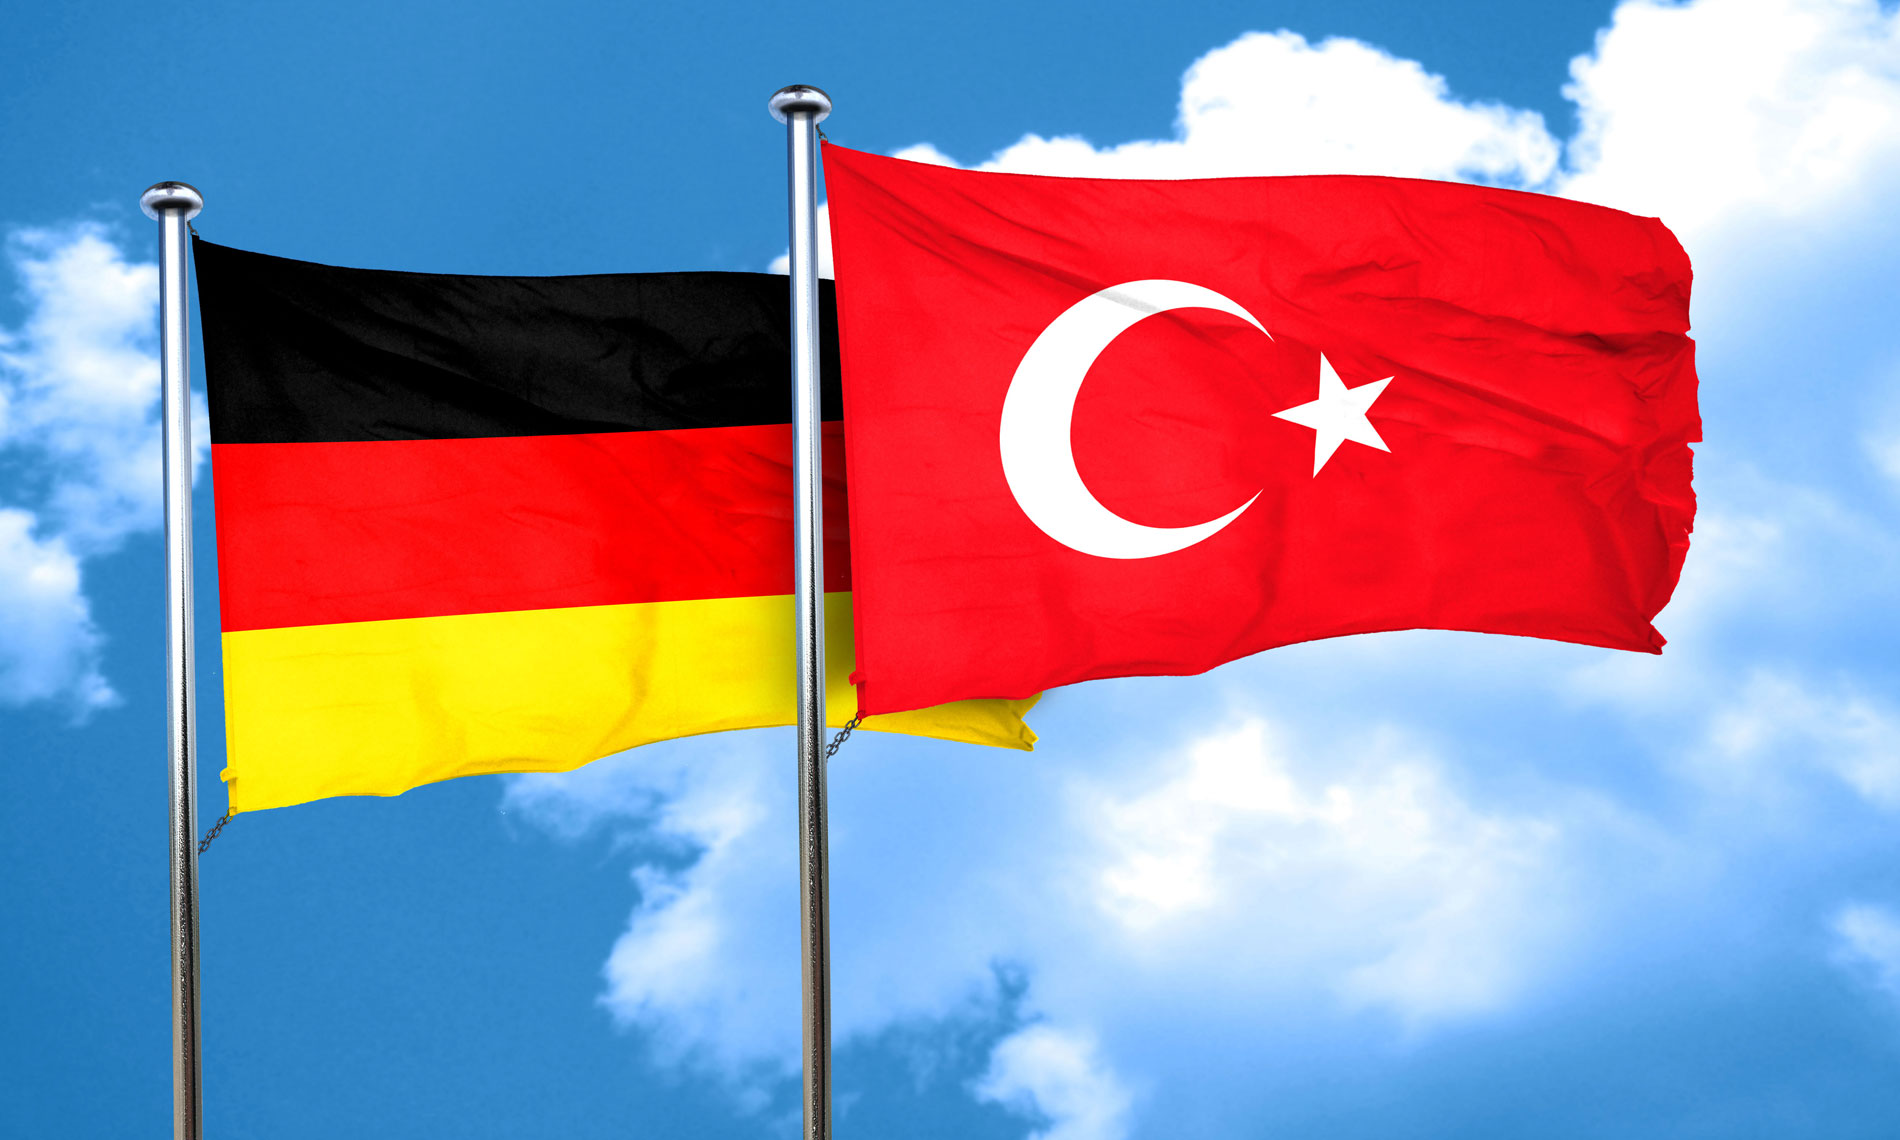 The German and Turkish flag